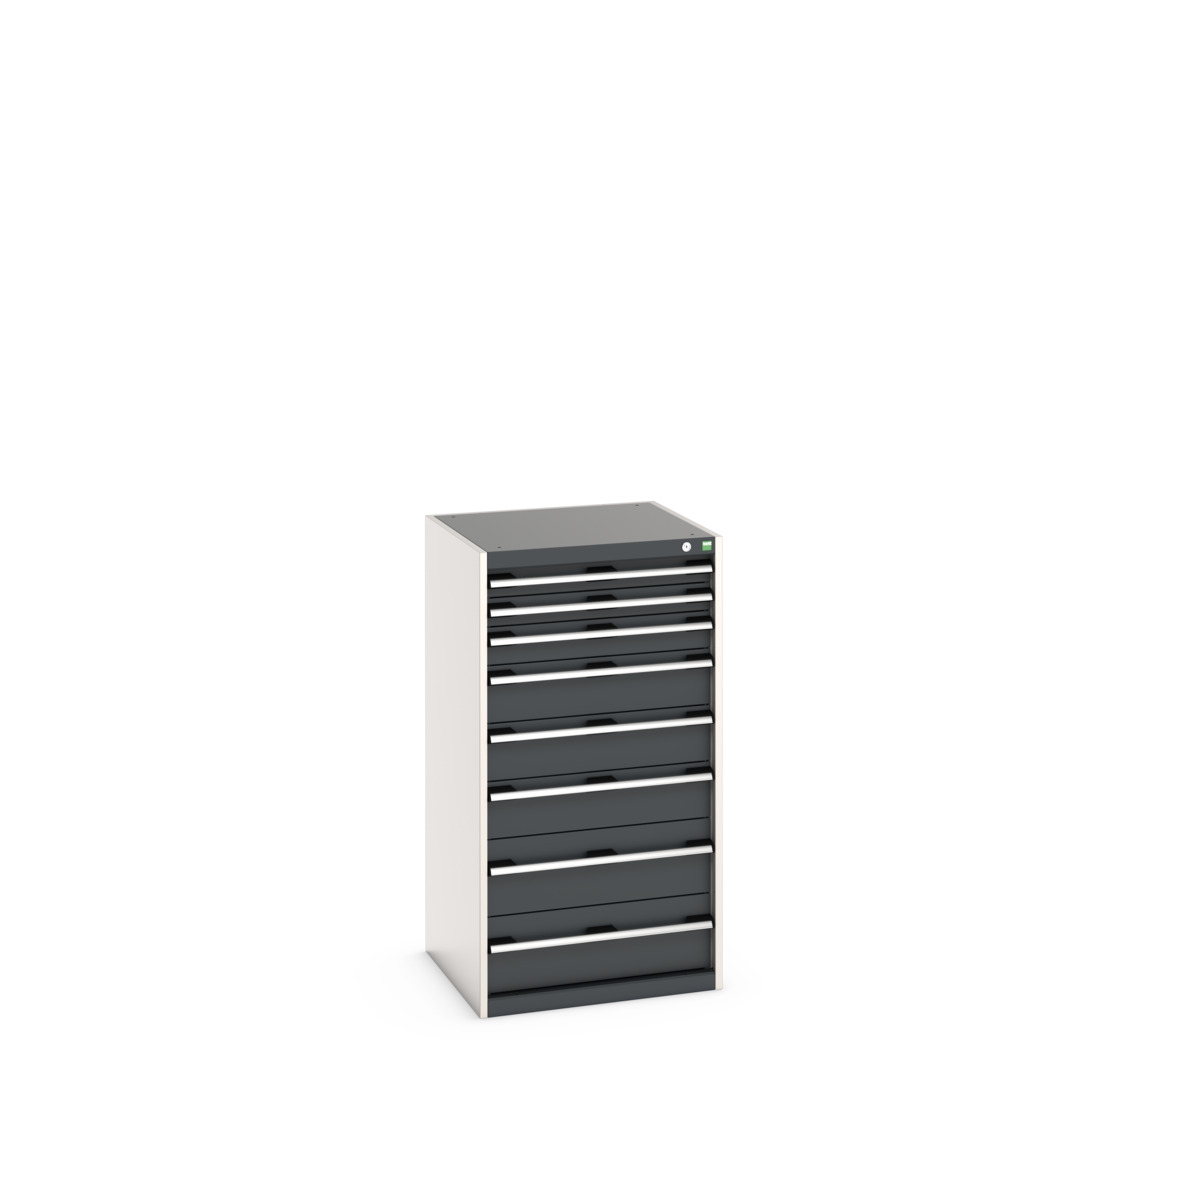 40019071. - cubio drawer cabinet